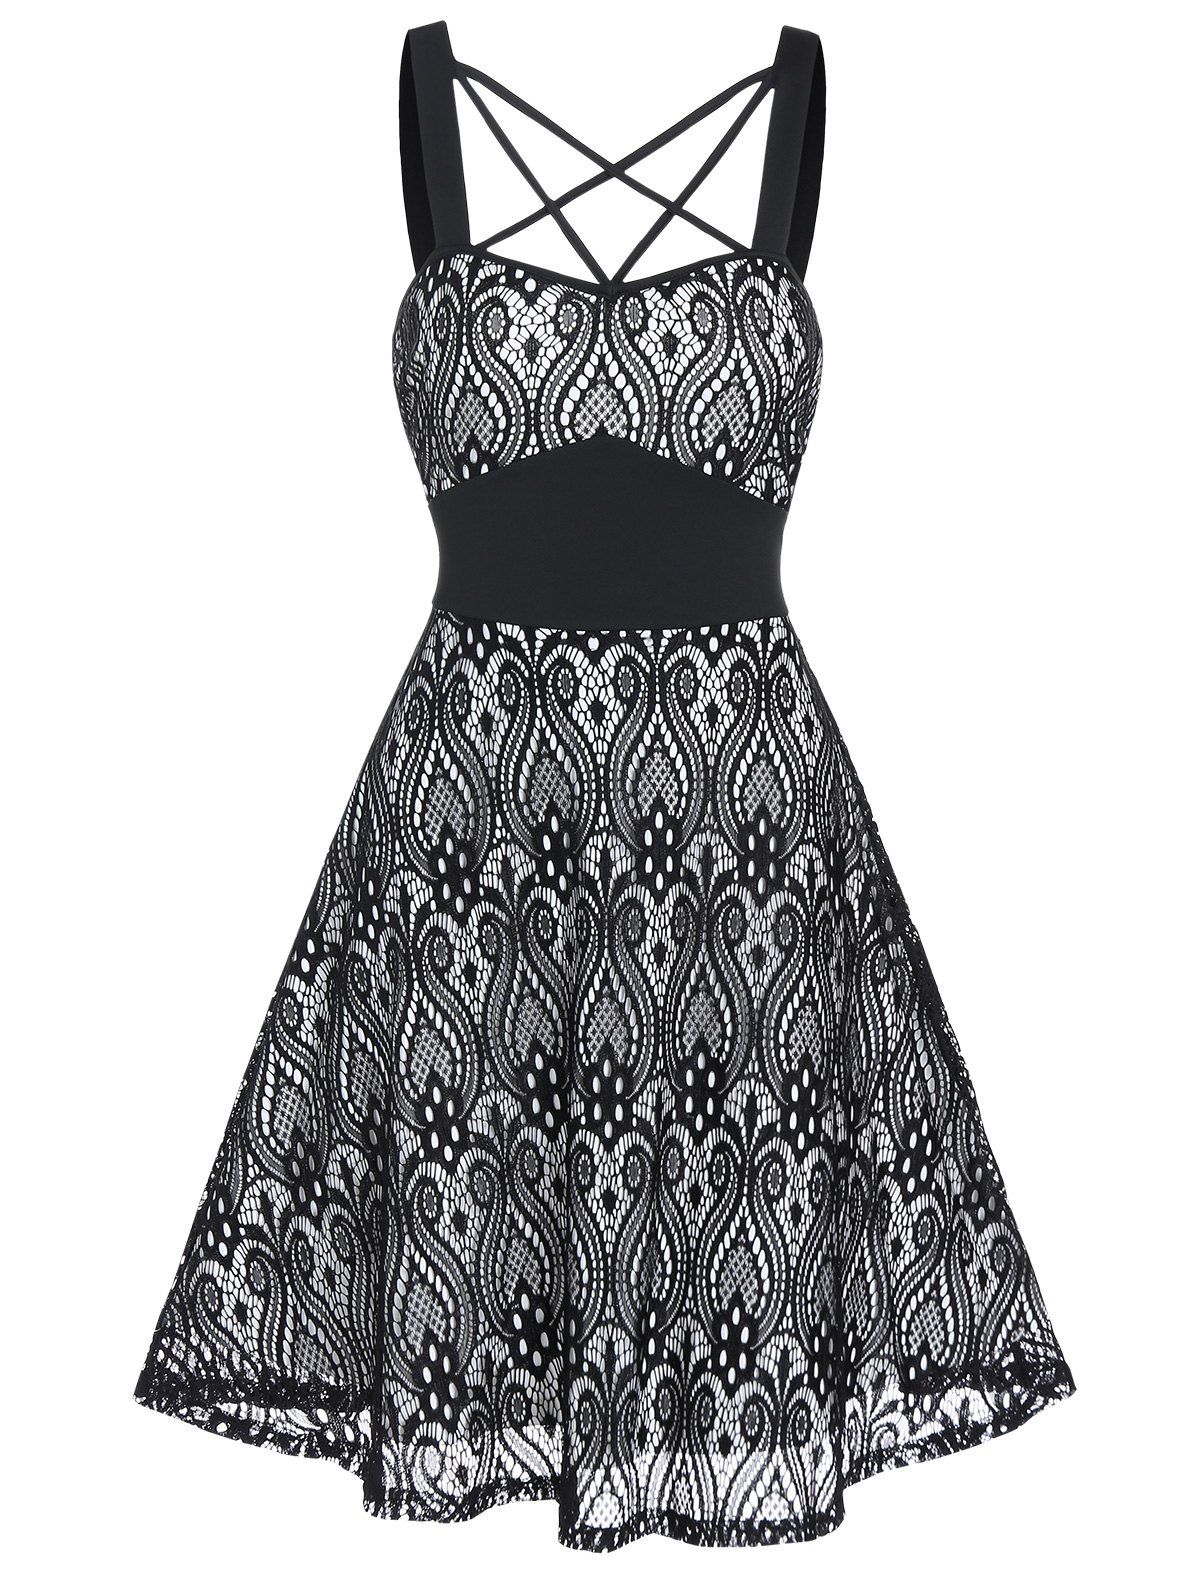 Ethnic Style Dress Tribal Flower Pattern Lace Dress Crisscross Gothic A Line Dress - BLACK XL